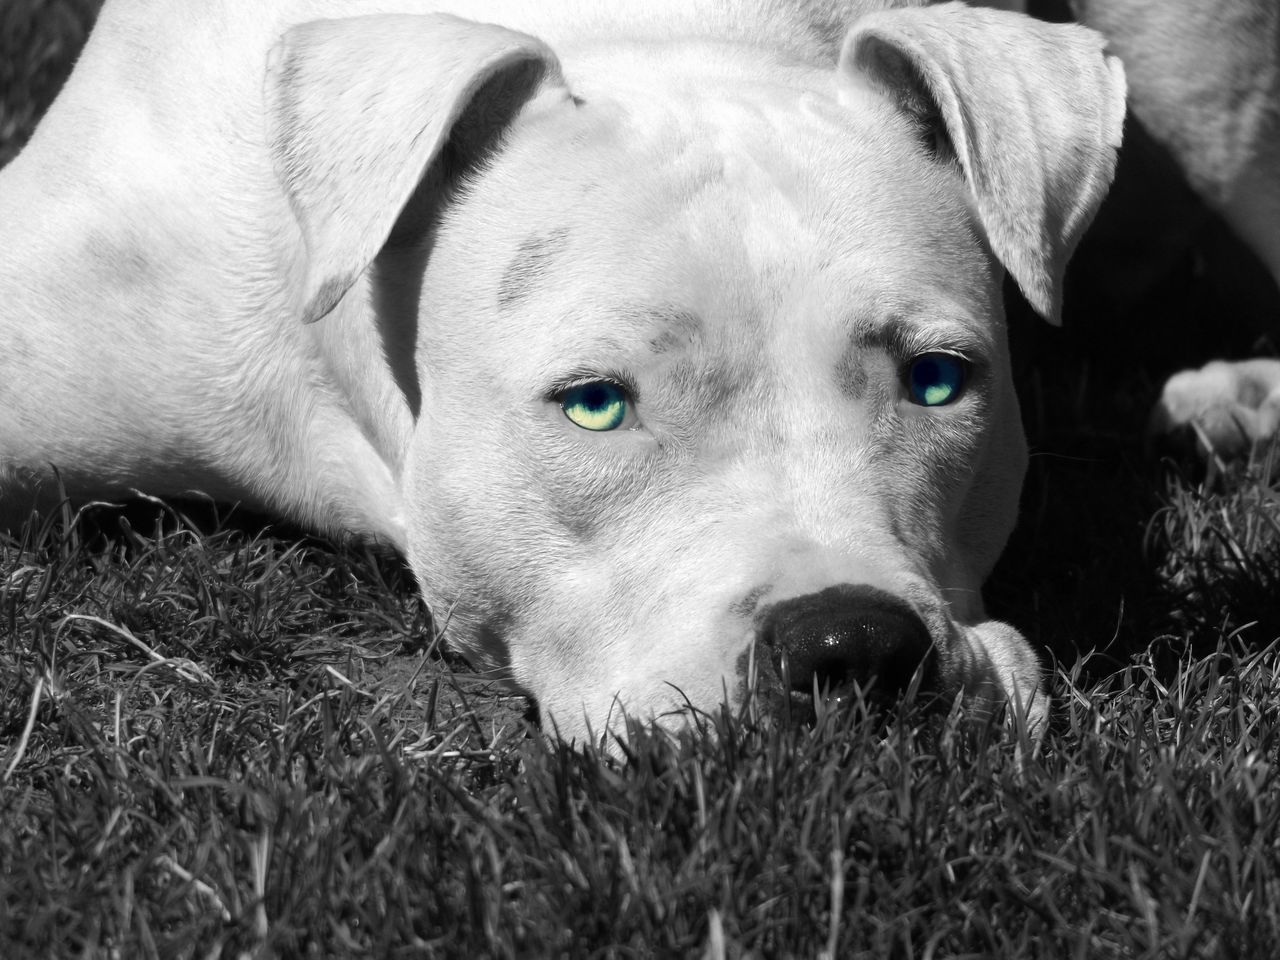 PORTRAIT OF DOG LYING ON GRASSY FIELD